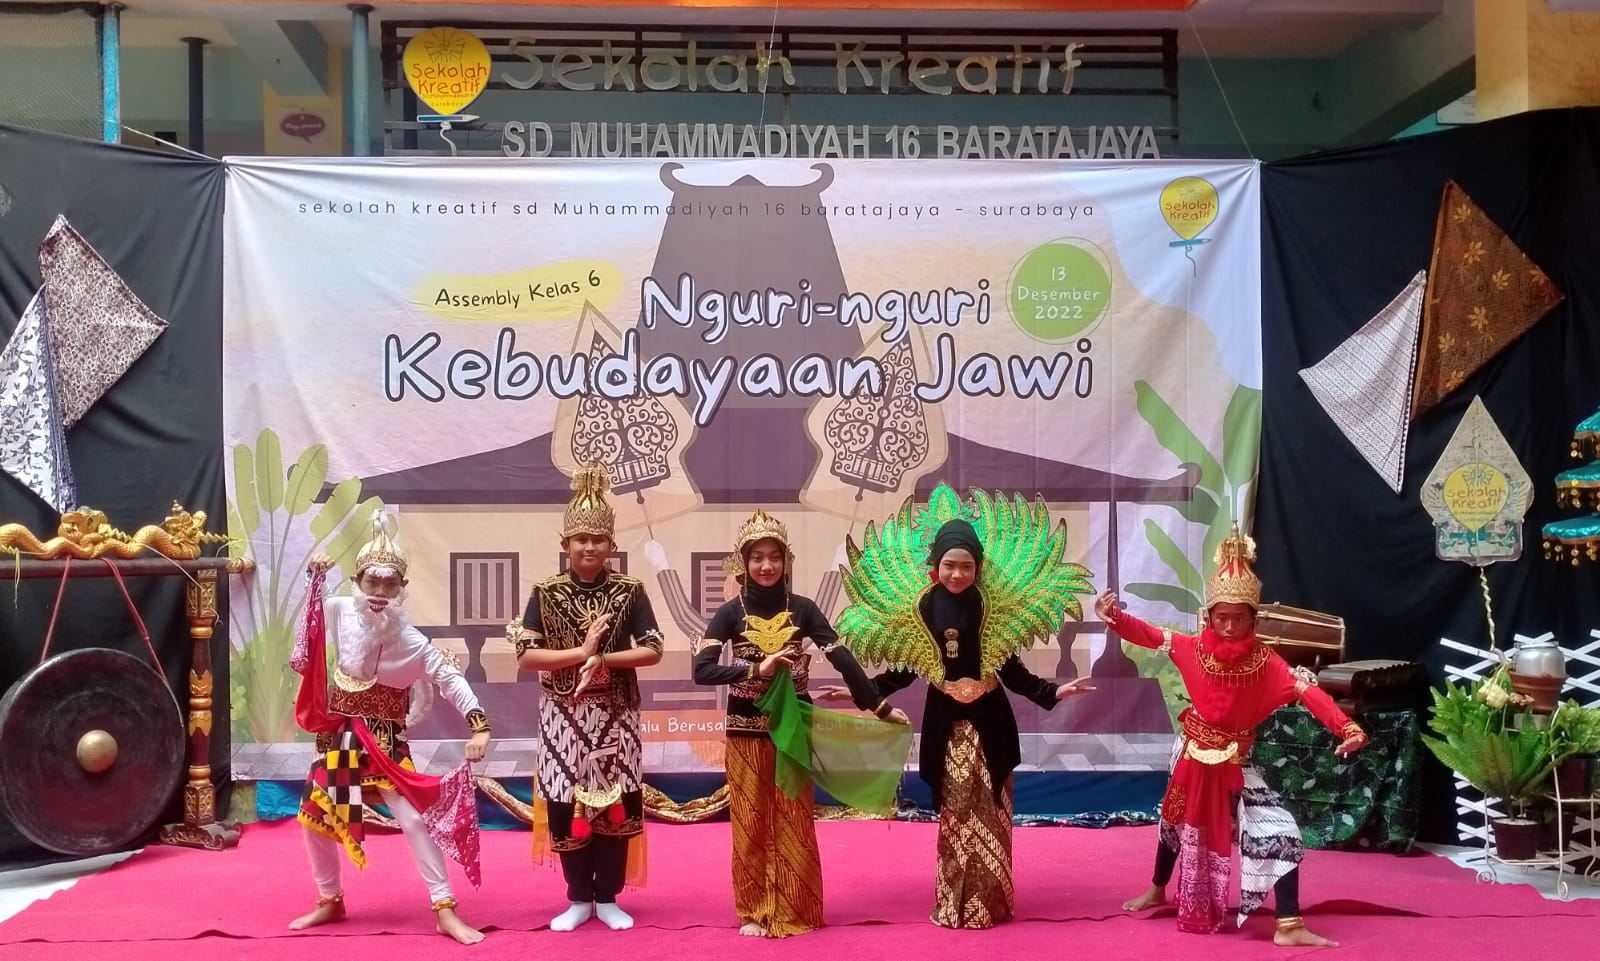 Nguri-uri Kebudayaan Jawa Di Sekolah Kreatif